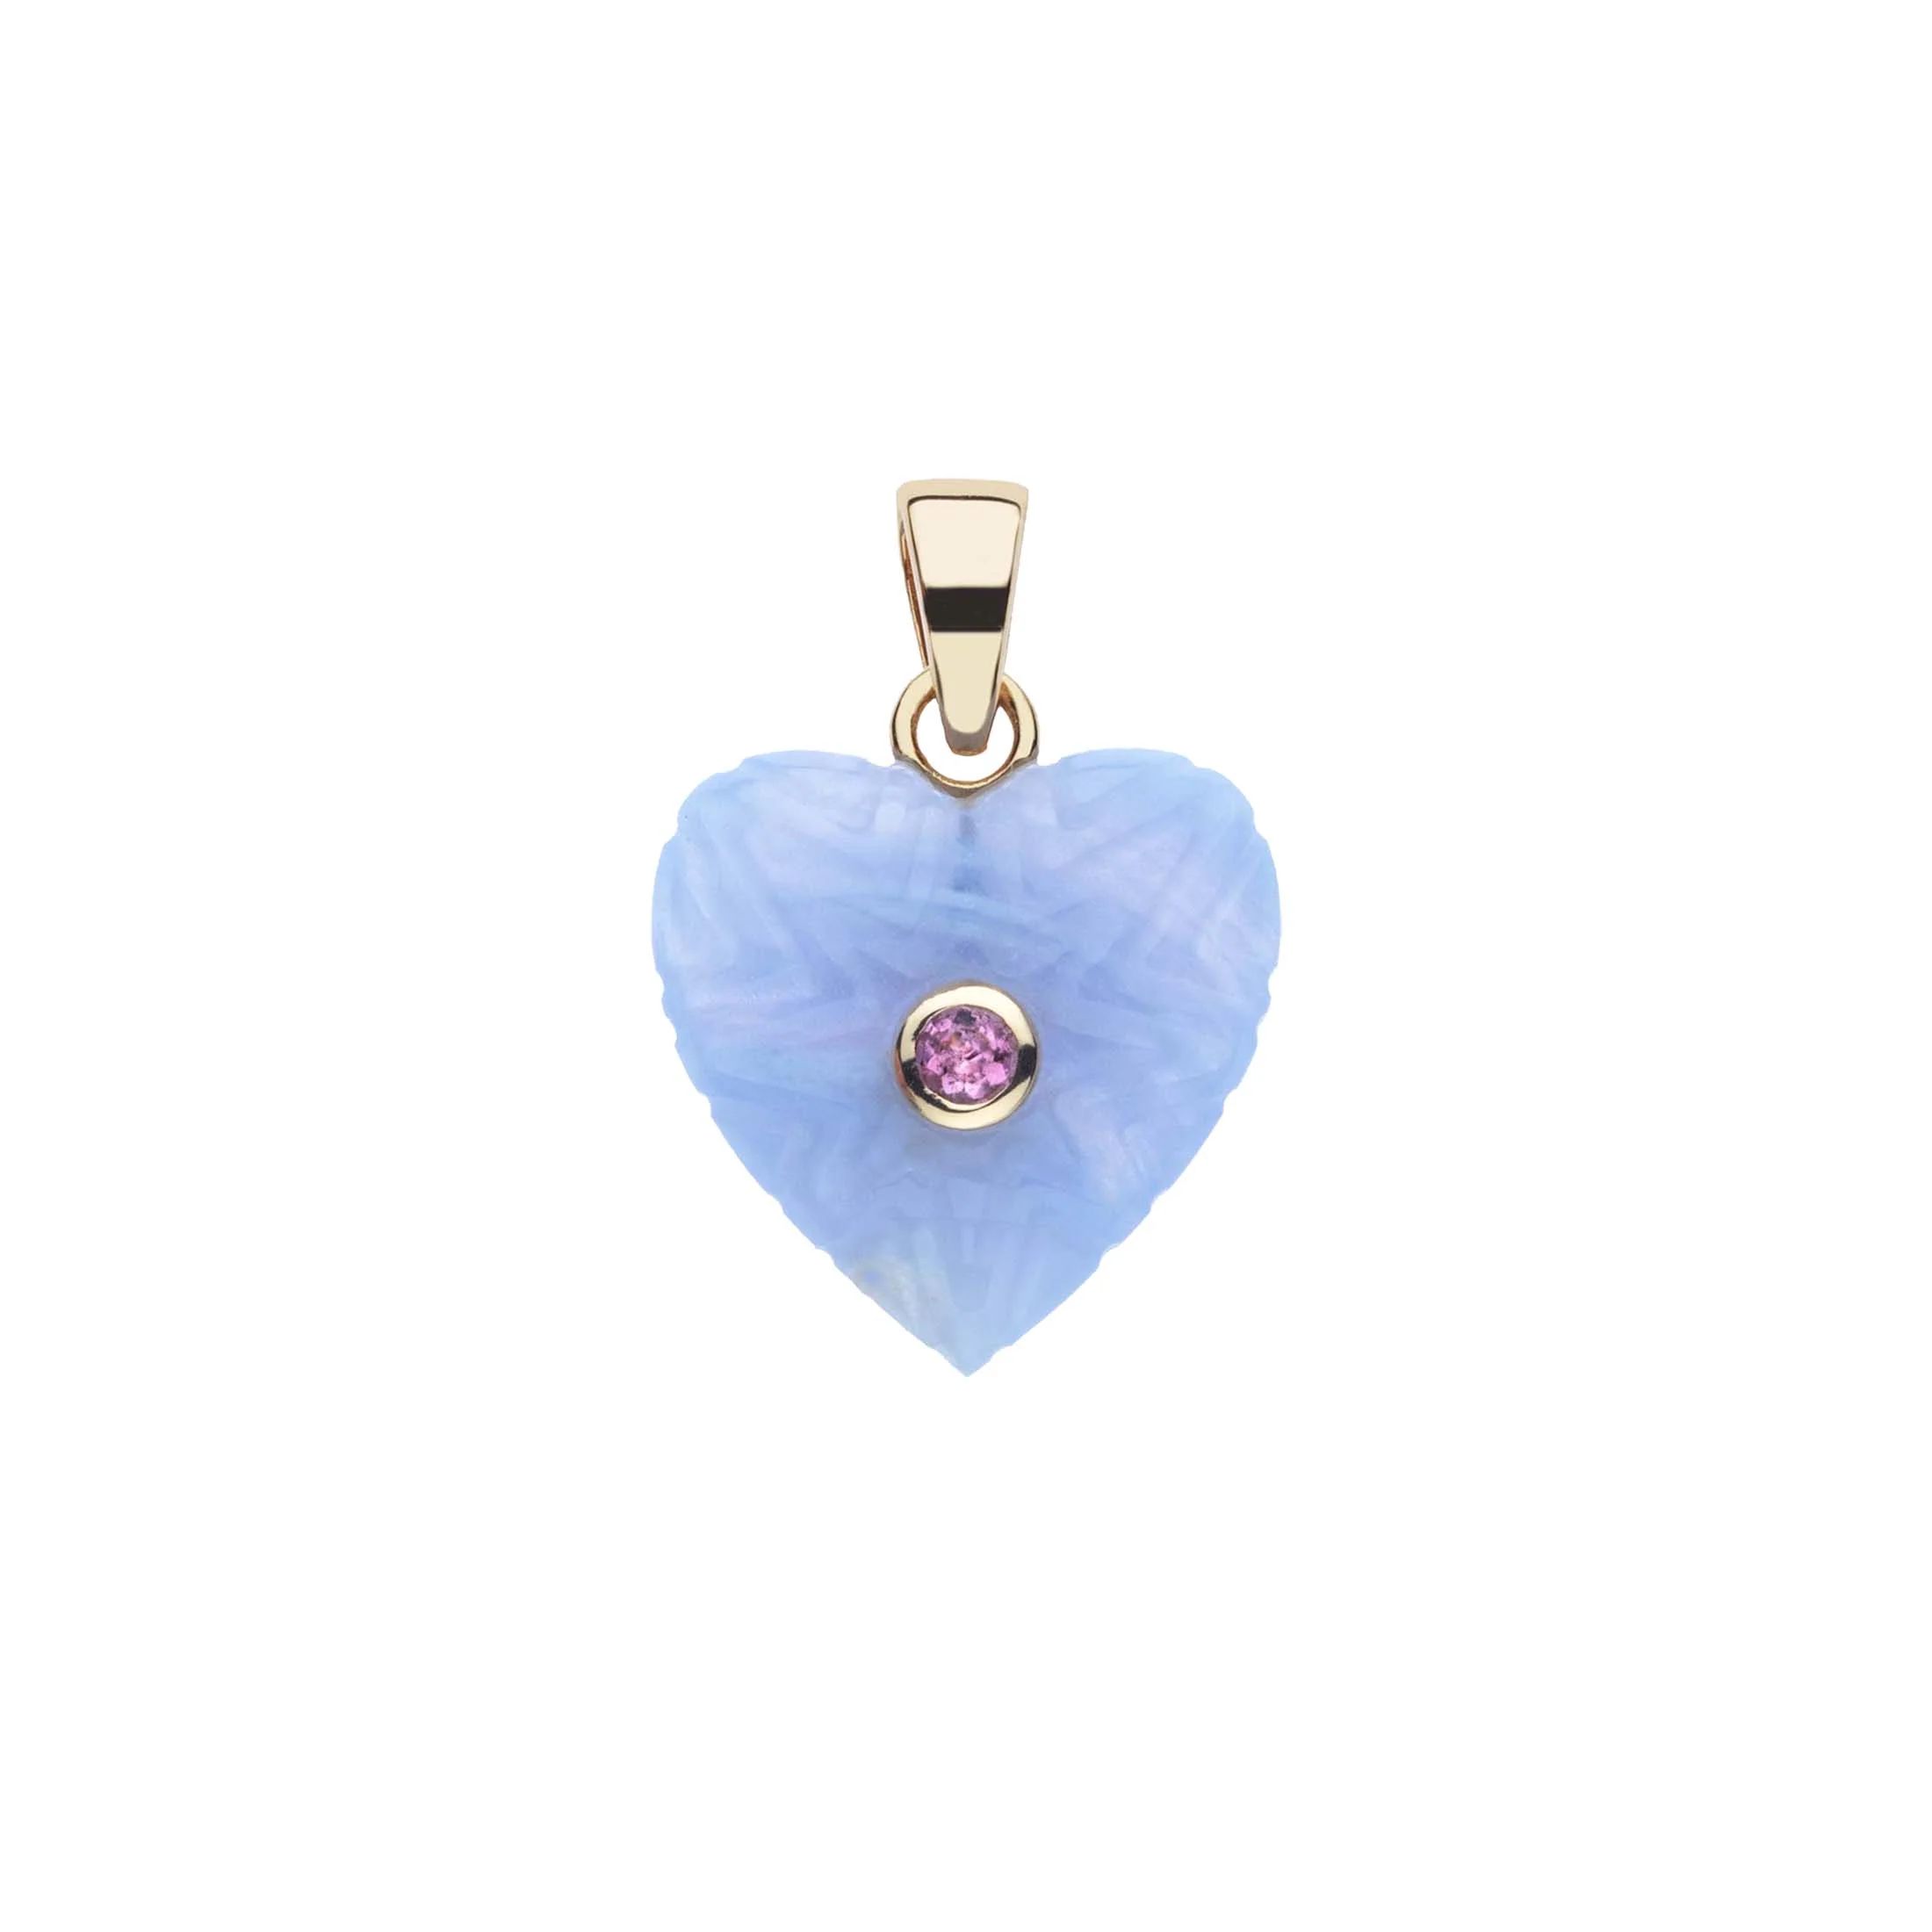 LOVE Starburst Stone Heart Pendant in Blue Lace Agate | Jane Win